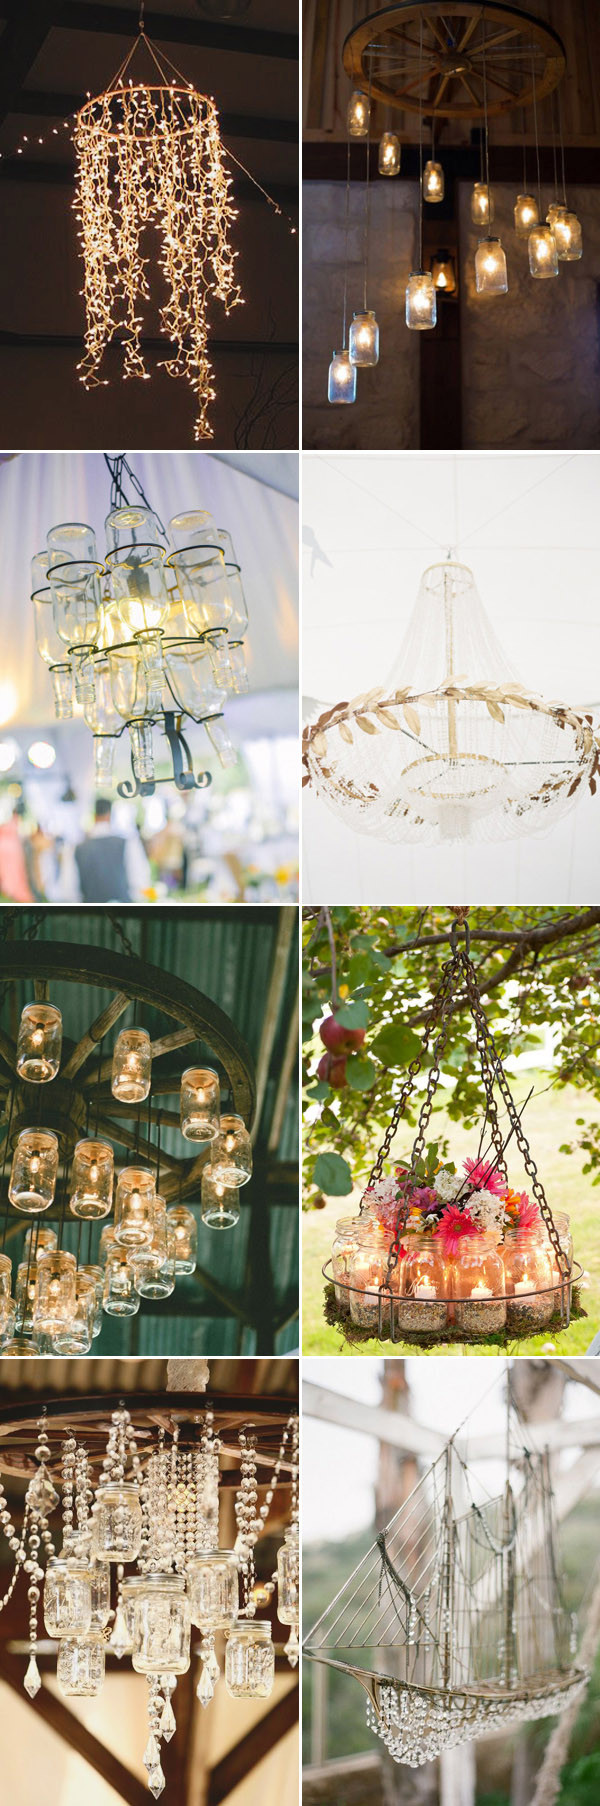 Best ideas about Wedding DIY Decoration
. Save or Pin Wedding Decorations 40 Romantic Ideas To Use Chandeliers Now.